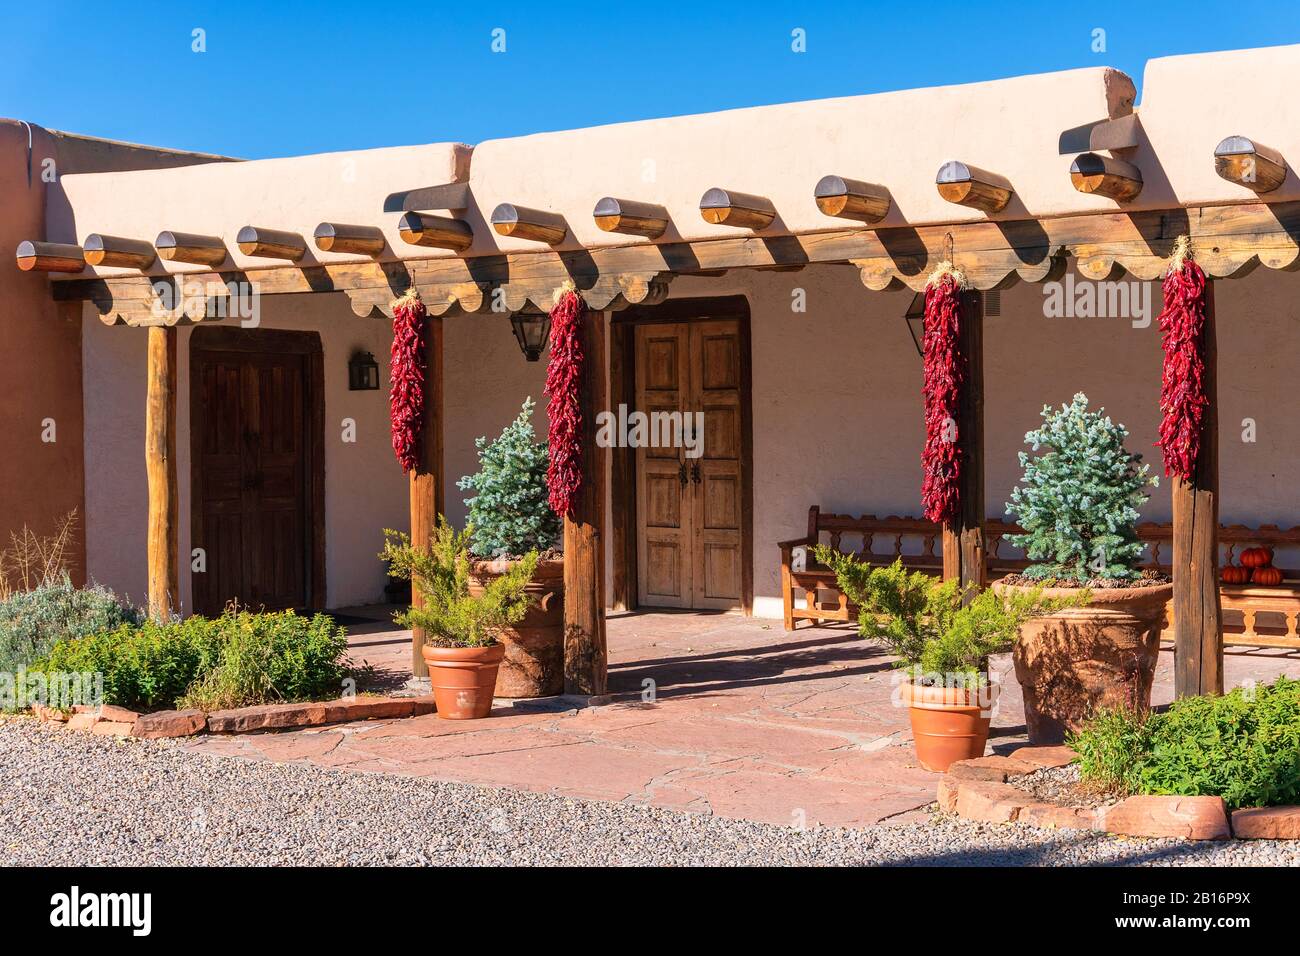 Pueblo-Stil adobe-architektur mit Ristras (getrocknete rote Chili Paprika) in Santa Fe, New Mexico, USA Stockfoto